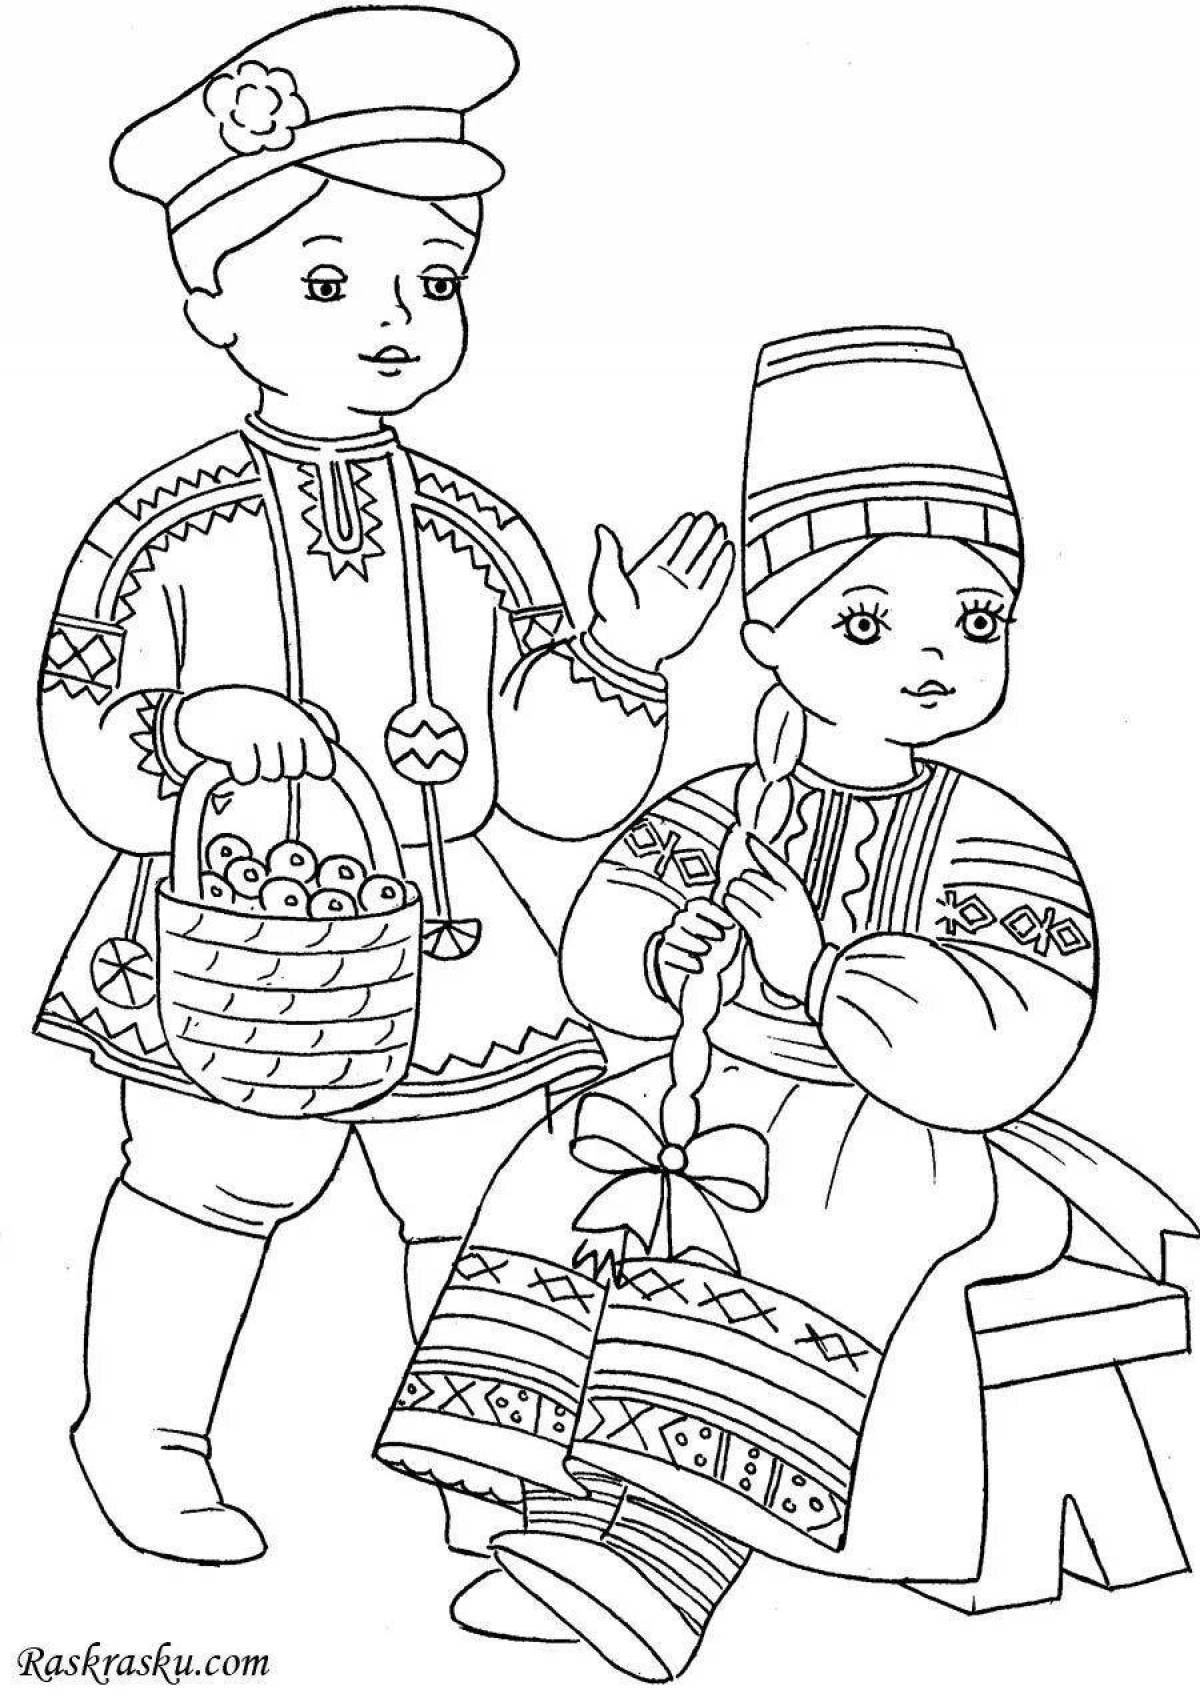 Cute Belarusian doll coloring book